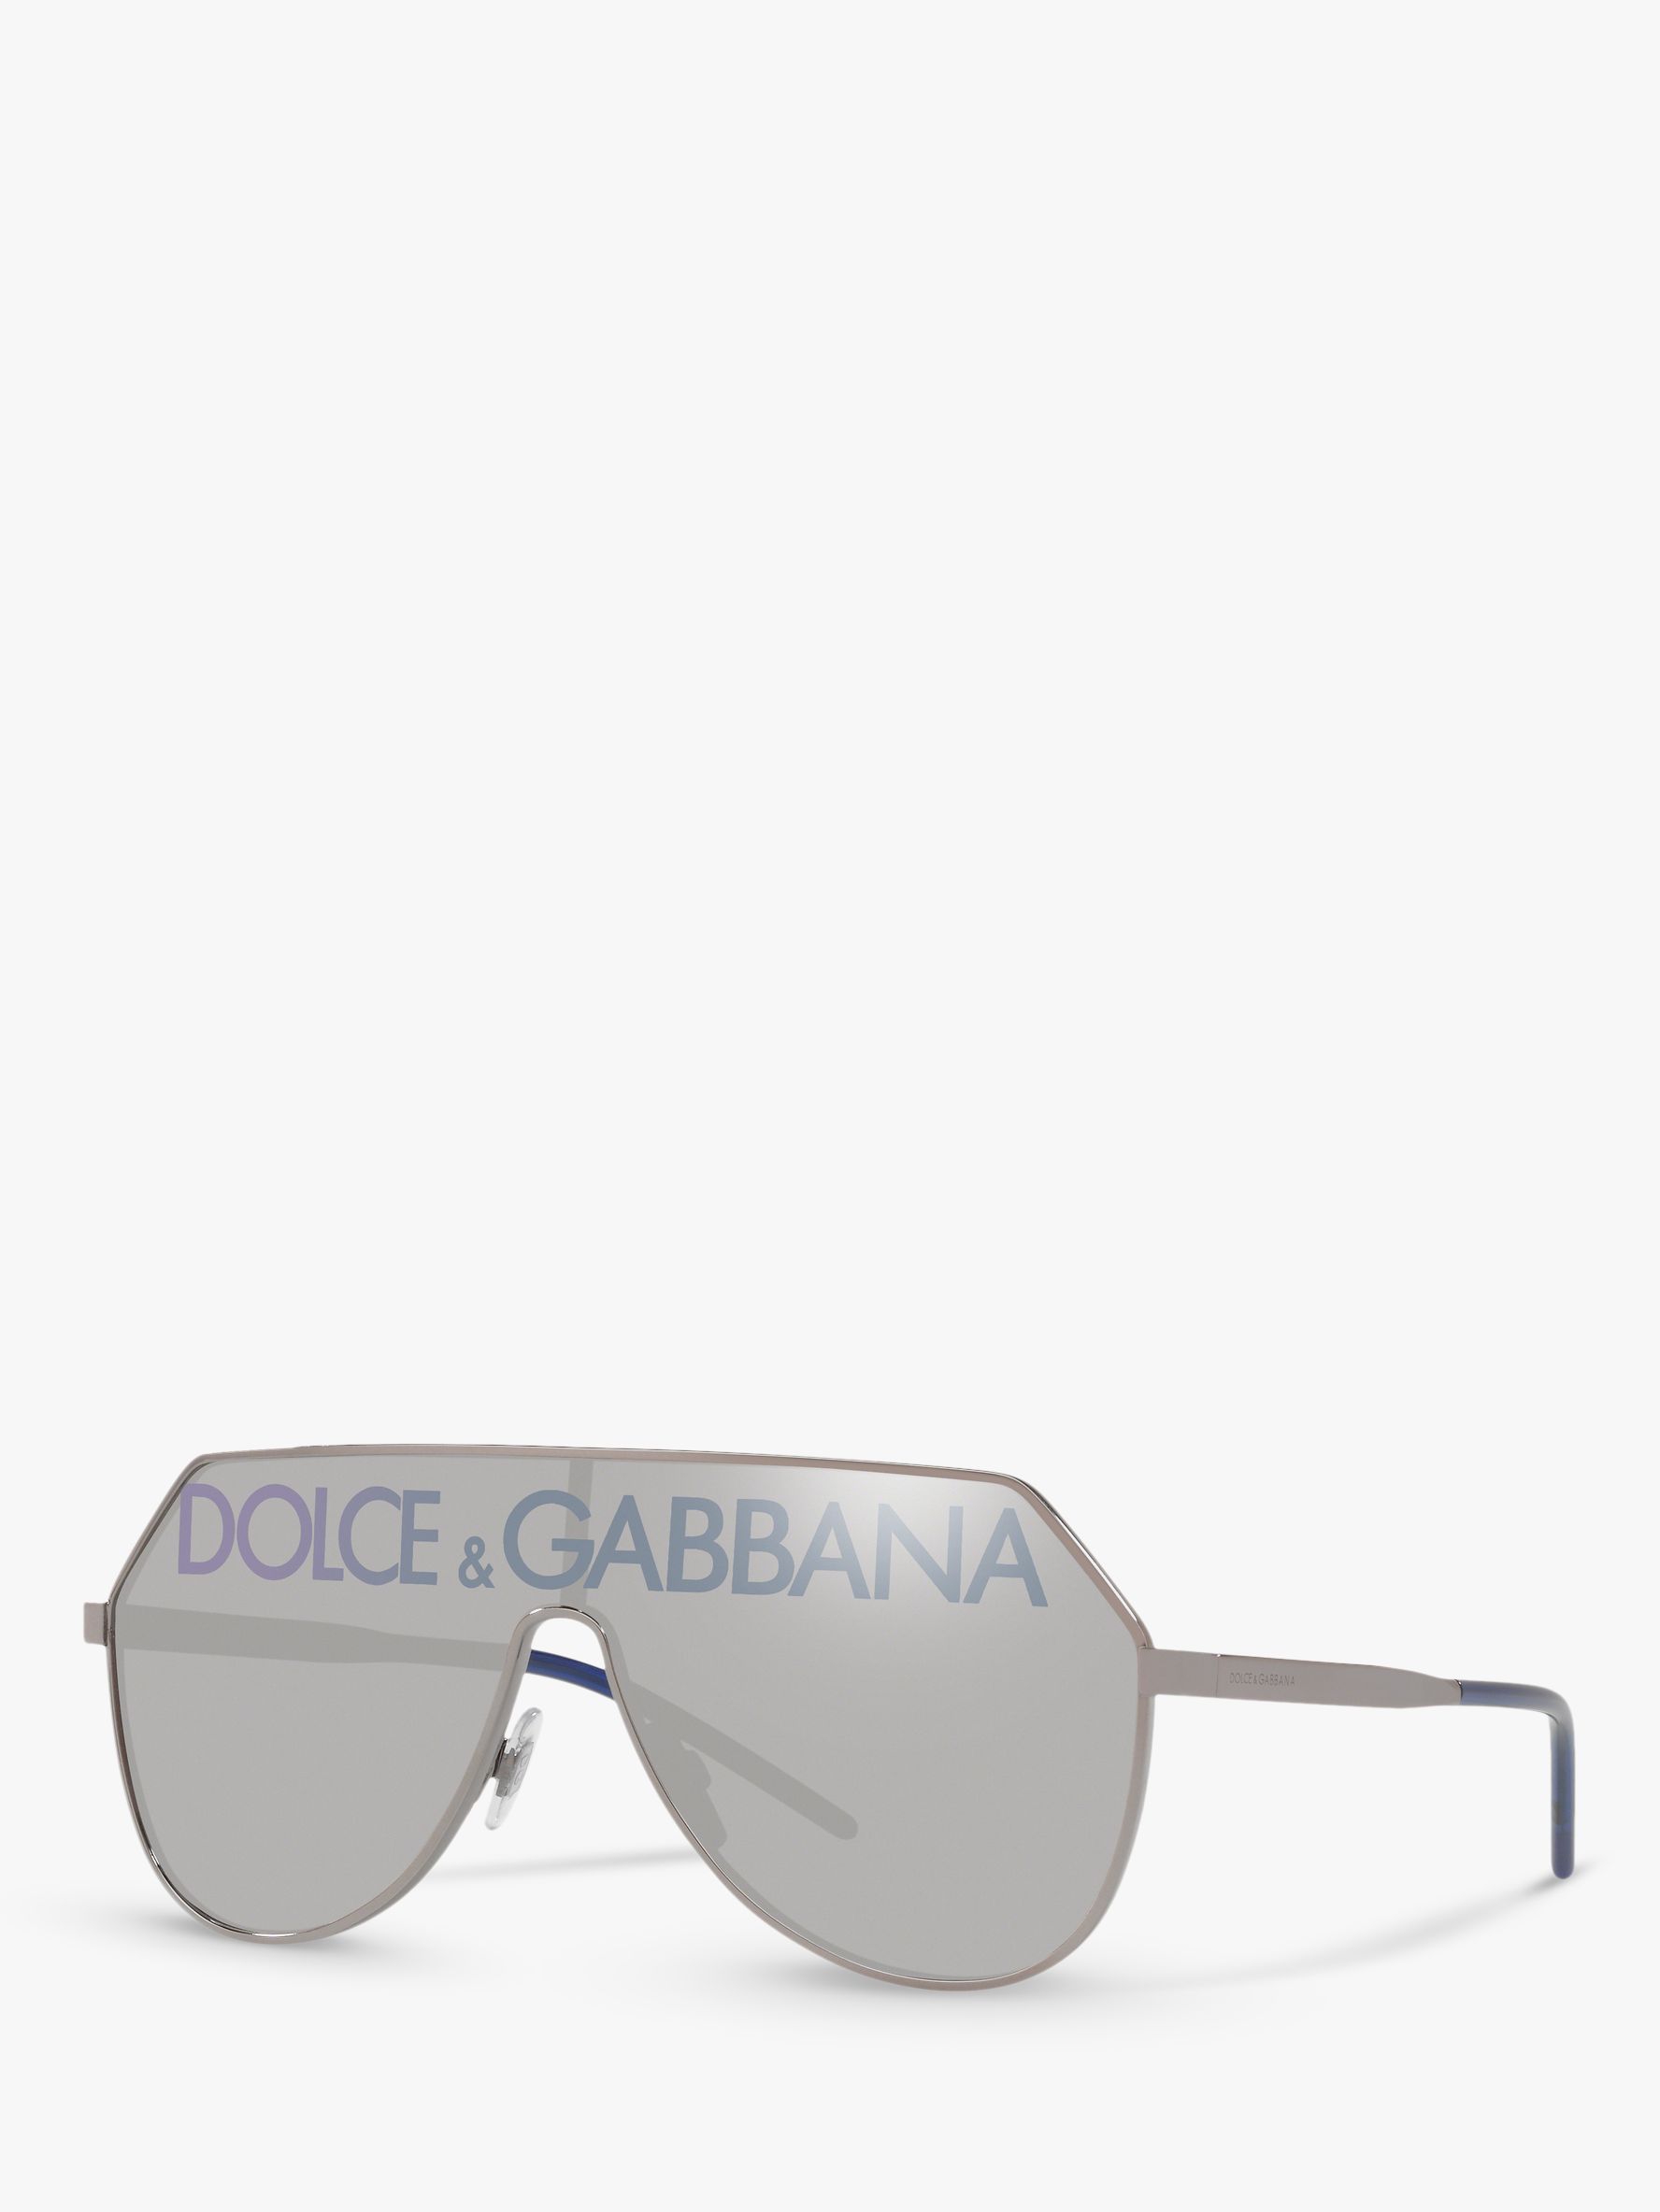 dolce and gabbana sunglasses aviator